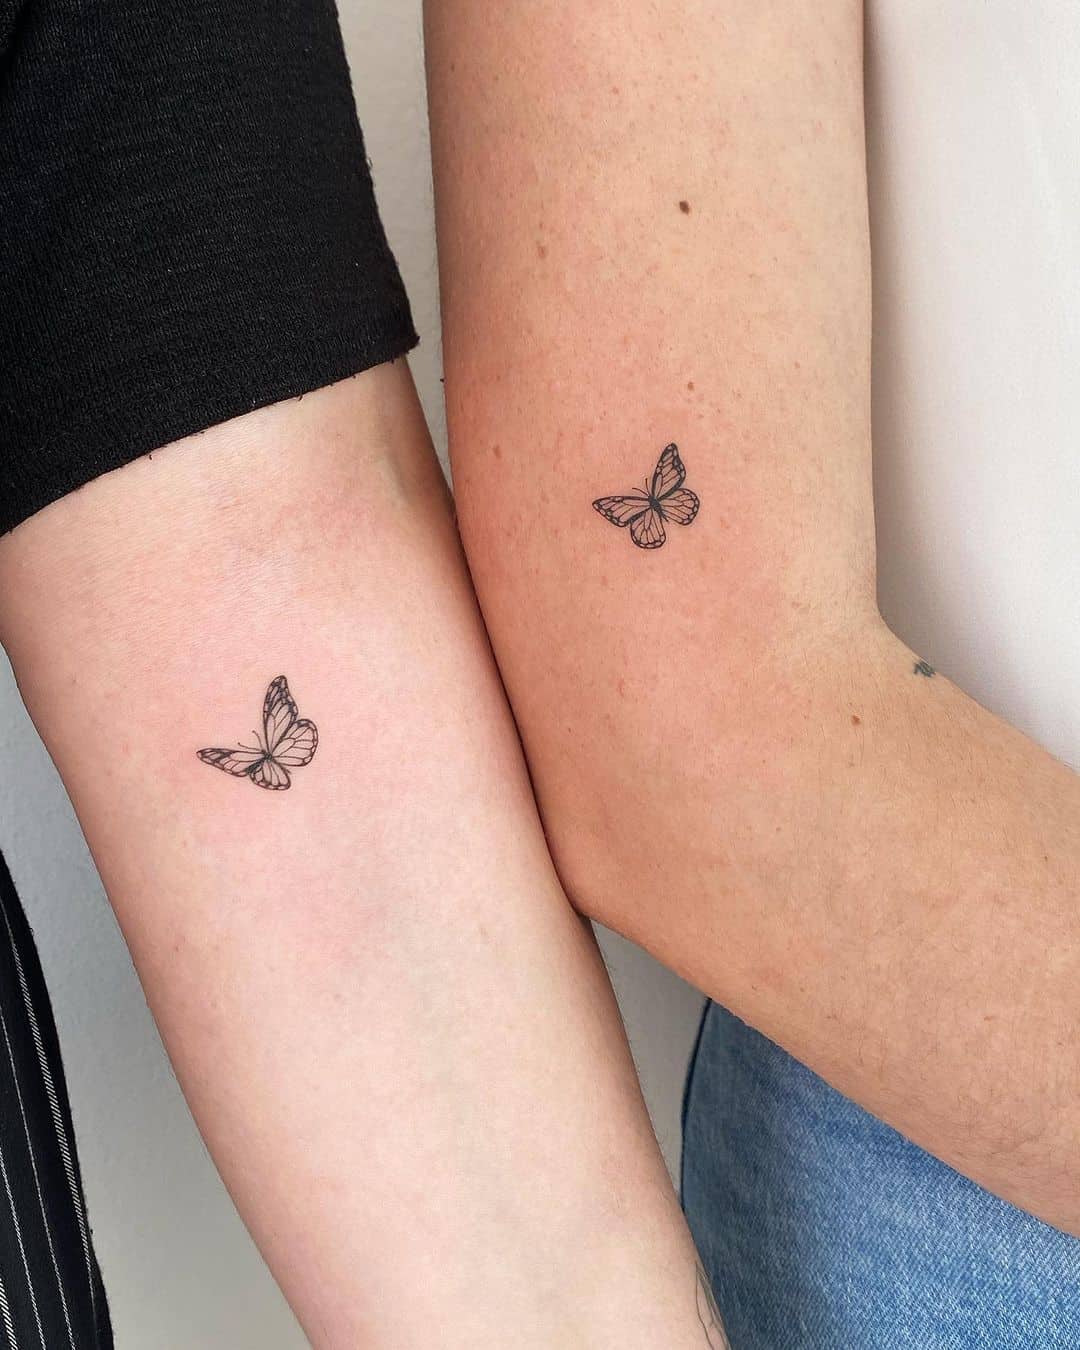 Cute matching butterfly tattoo on arm by joannamroman